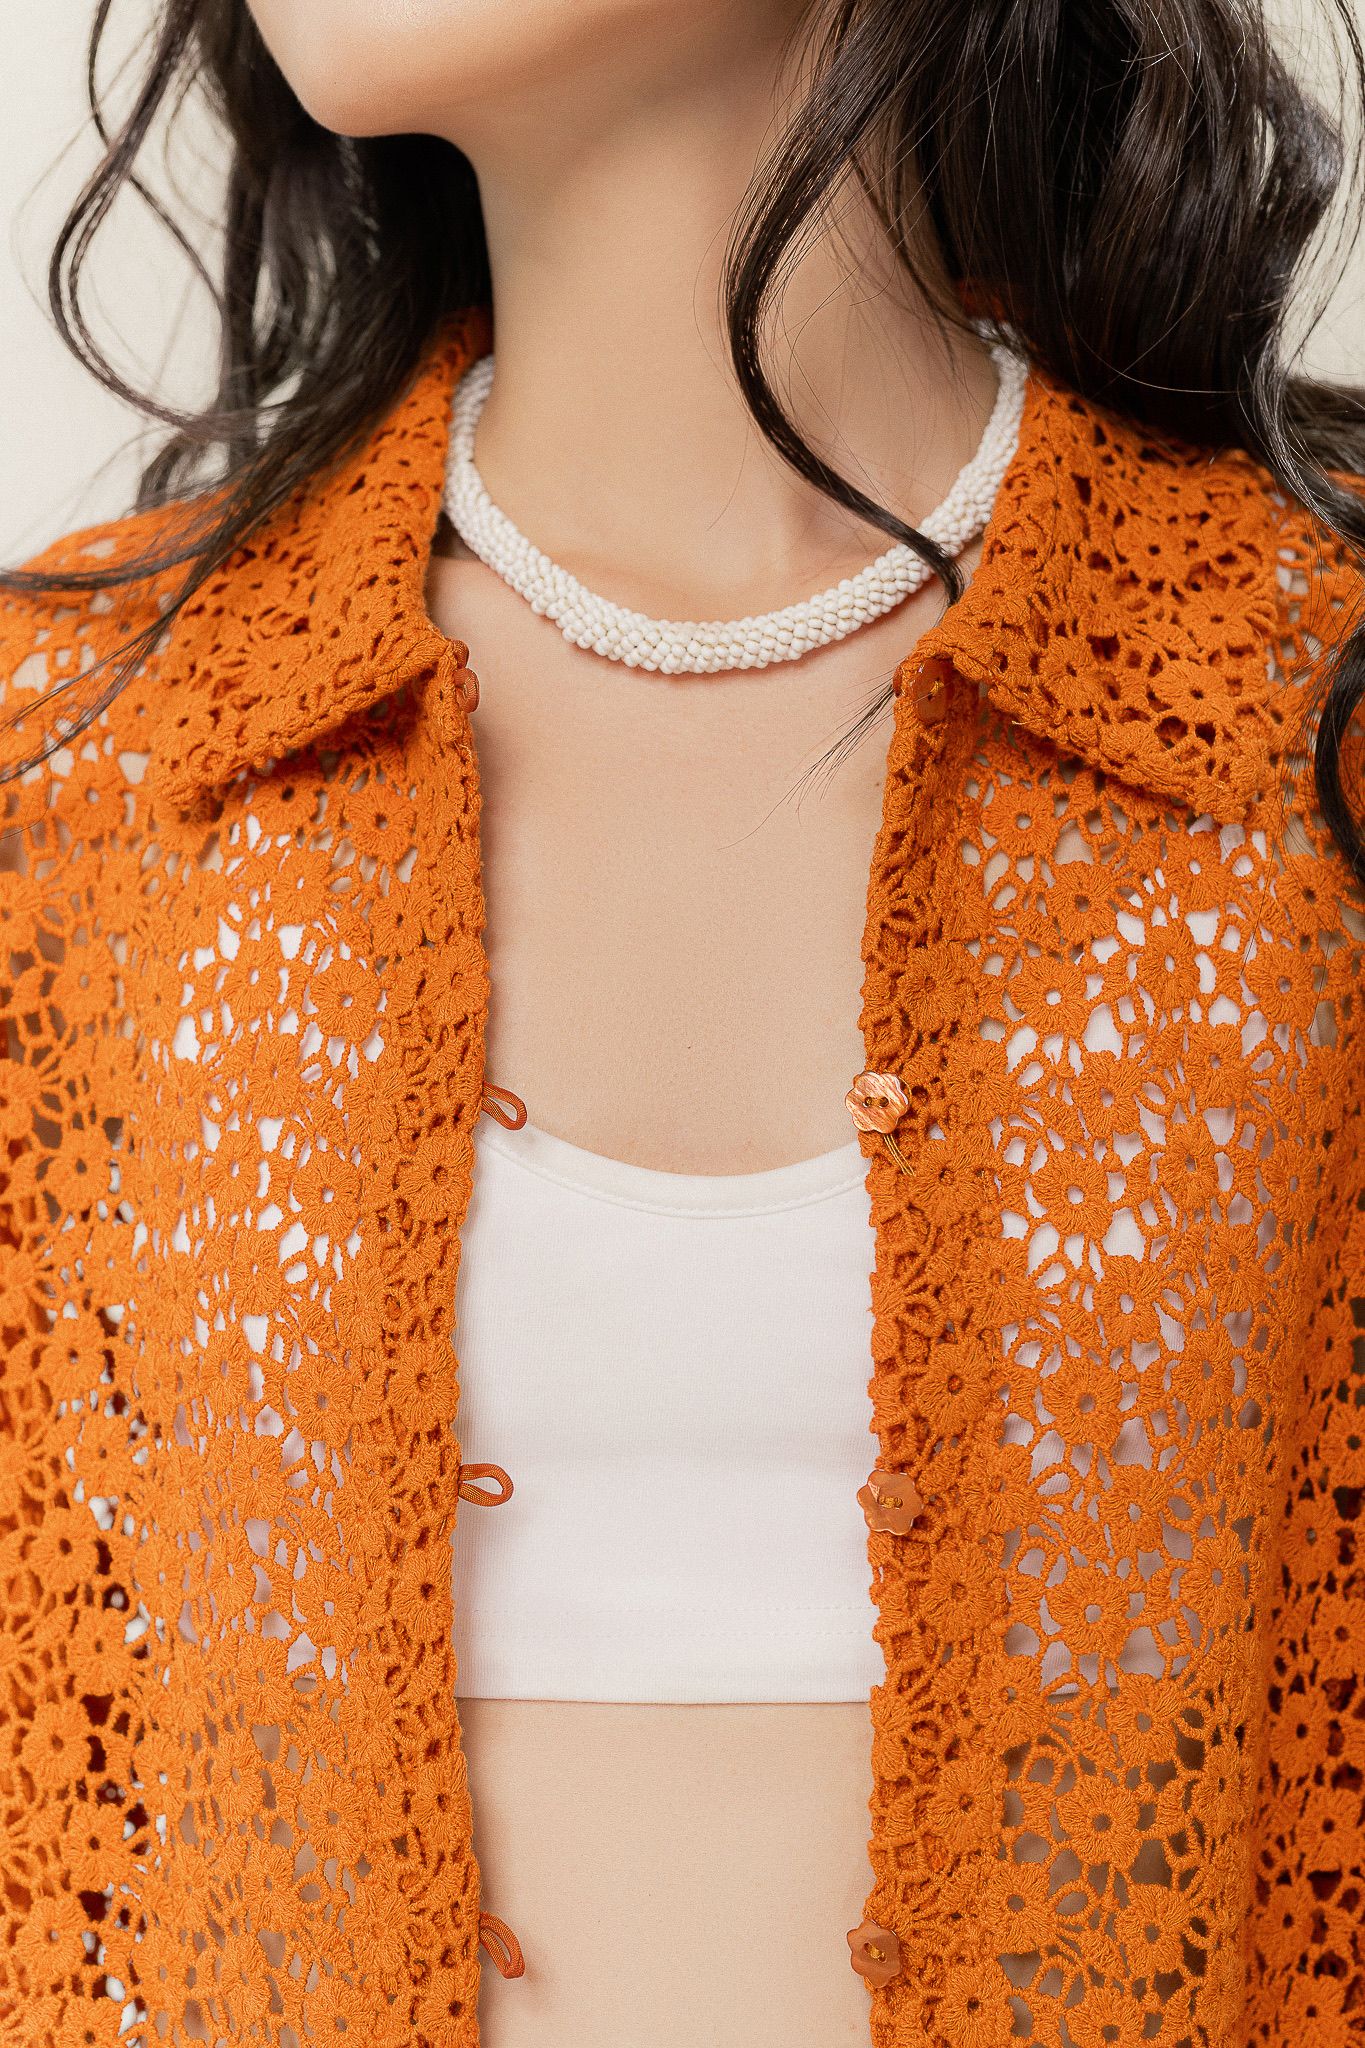  Tangerine Guipure Lace Short Sleeve Shirt 